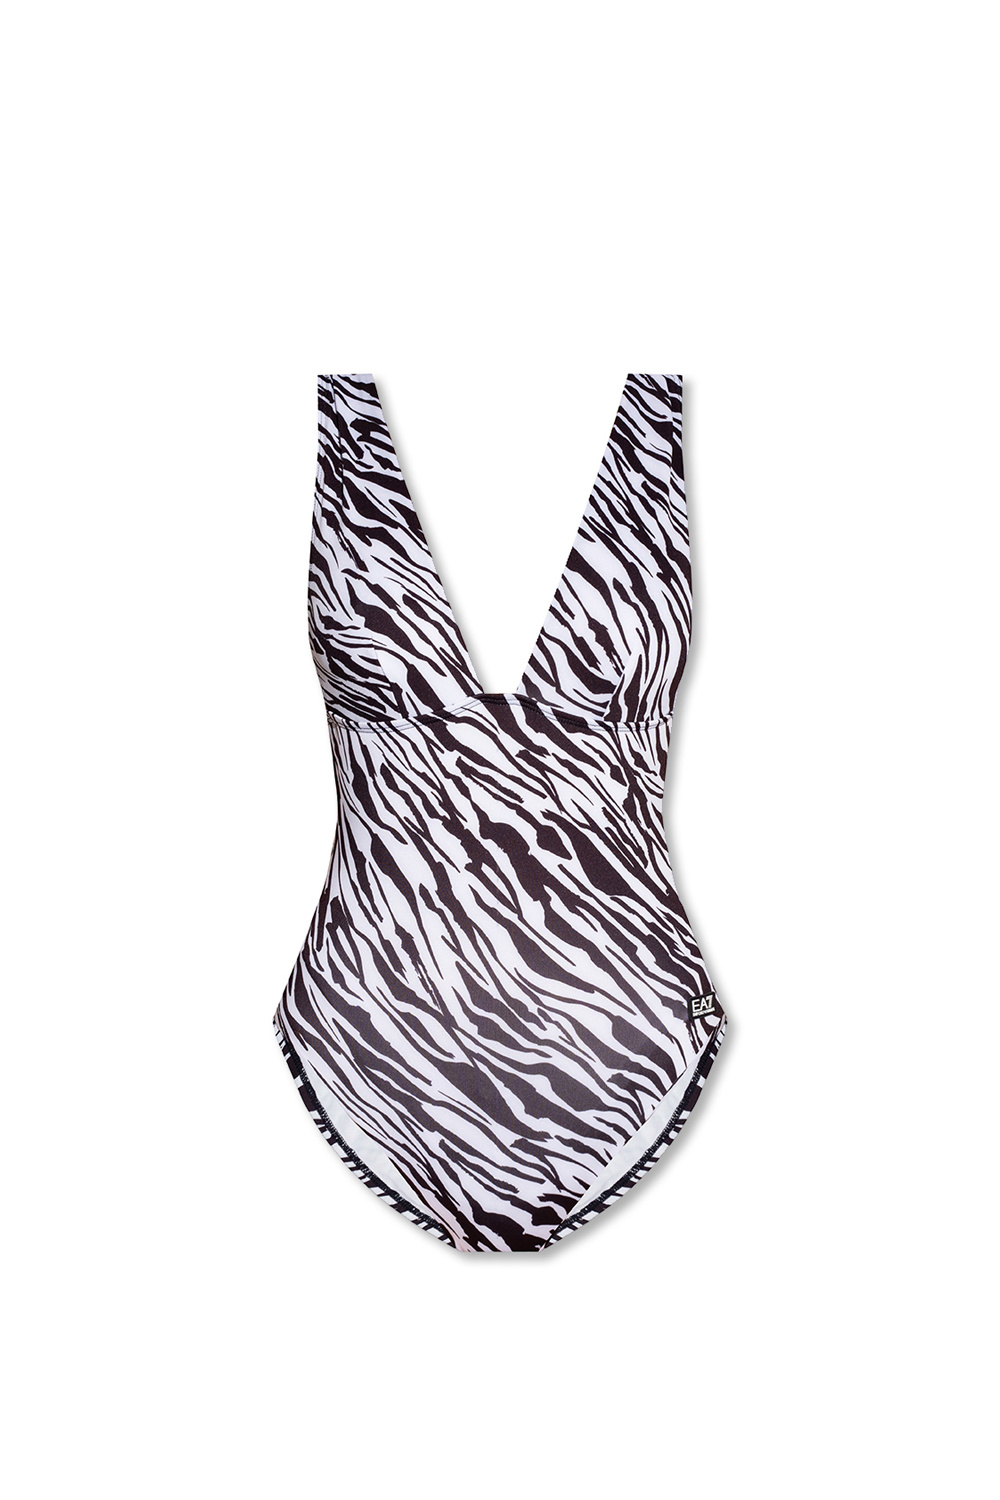 Giorgio Armani Clothing for Men One-piece swimsuit